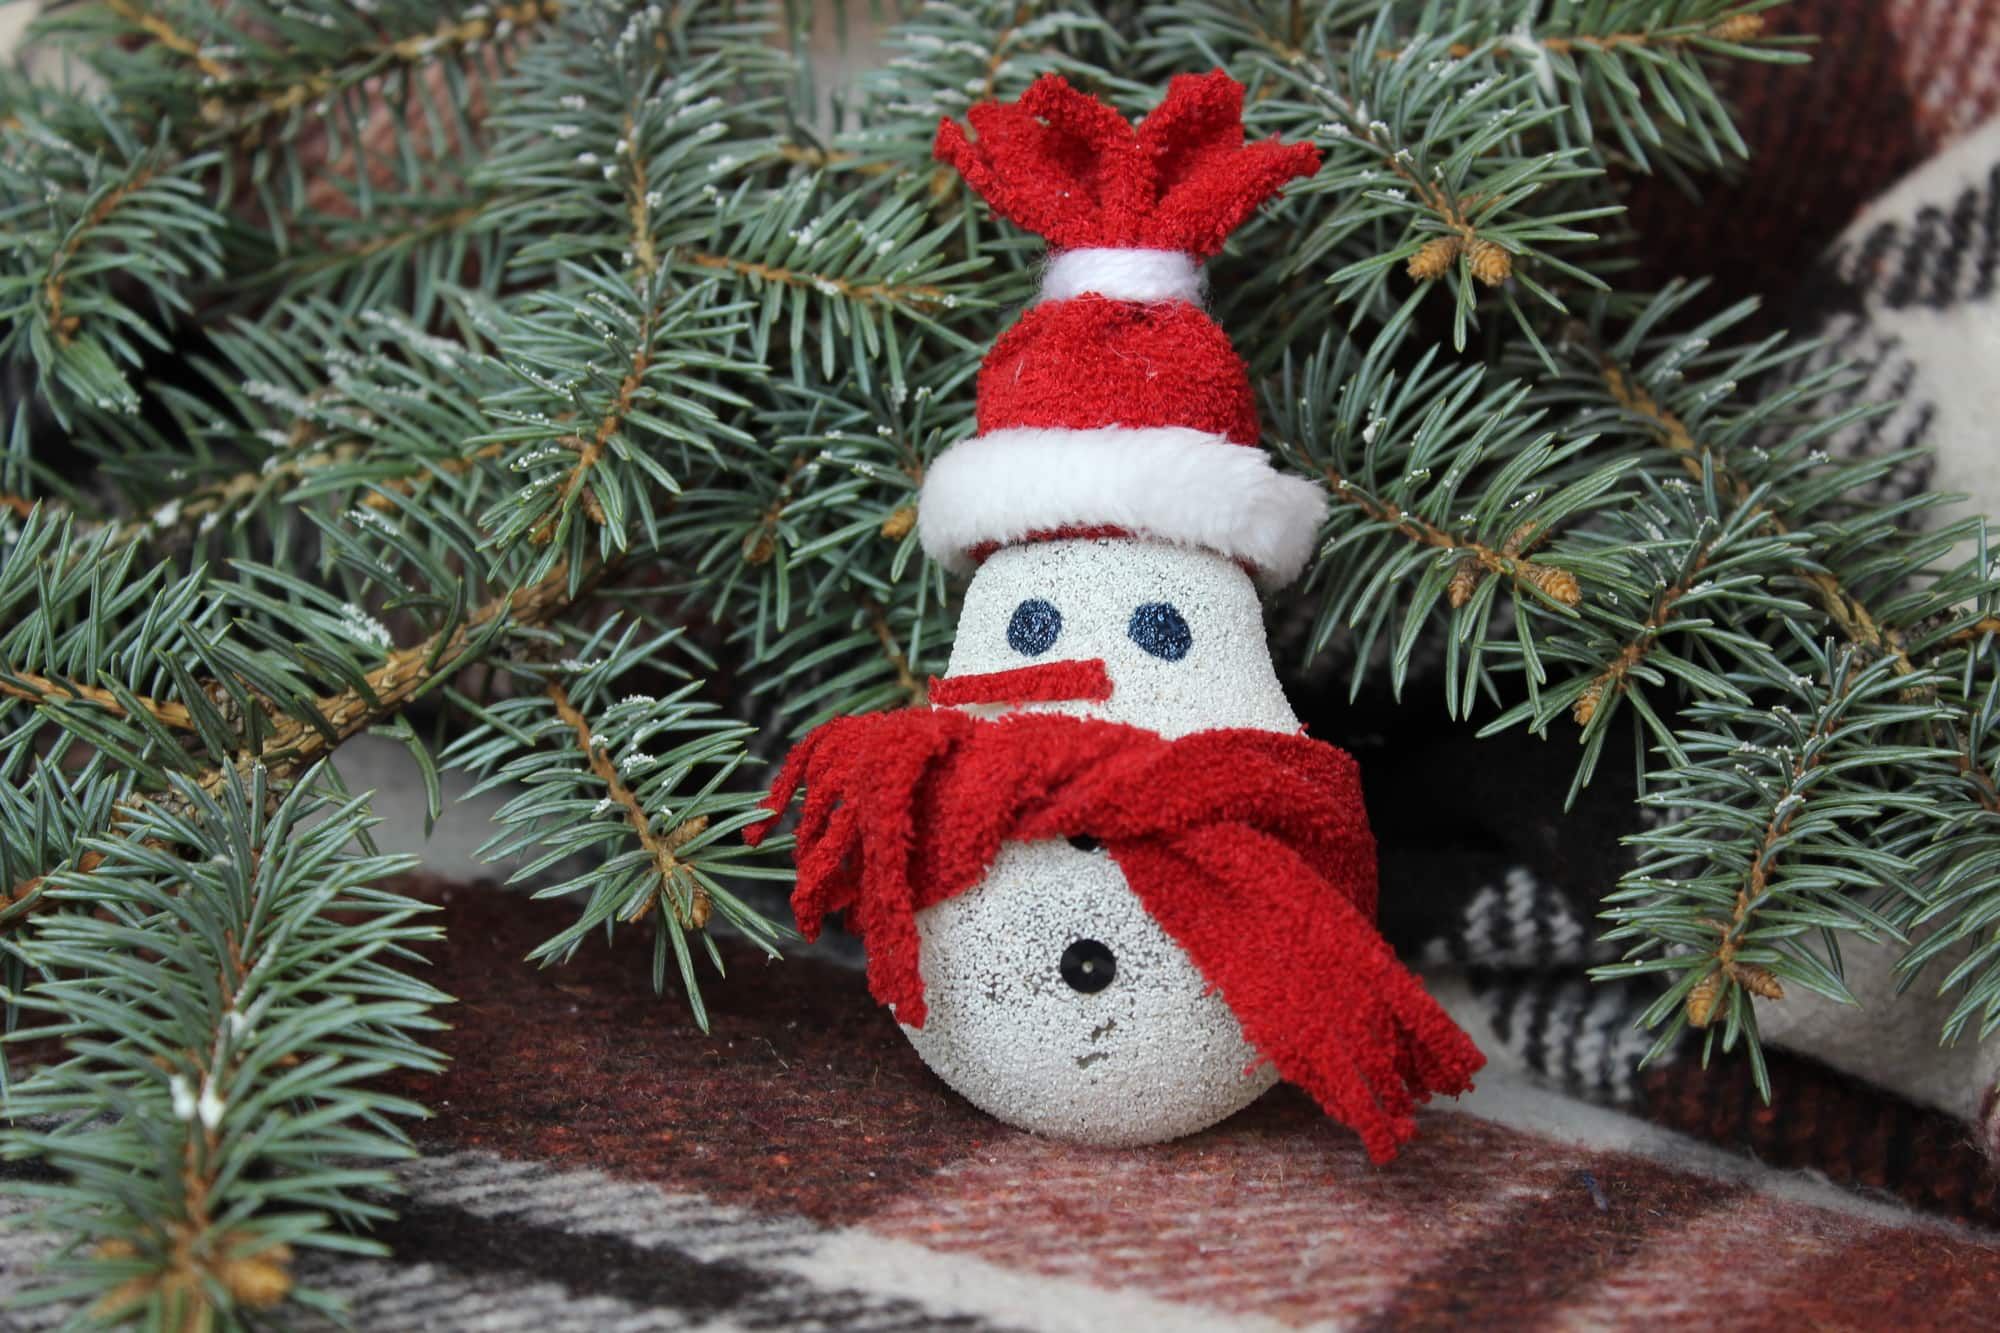 Snowman made from light bulb near Christmas tree